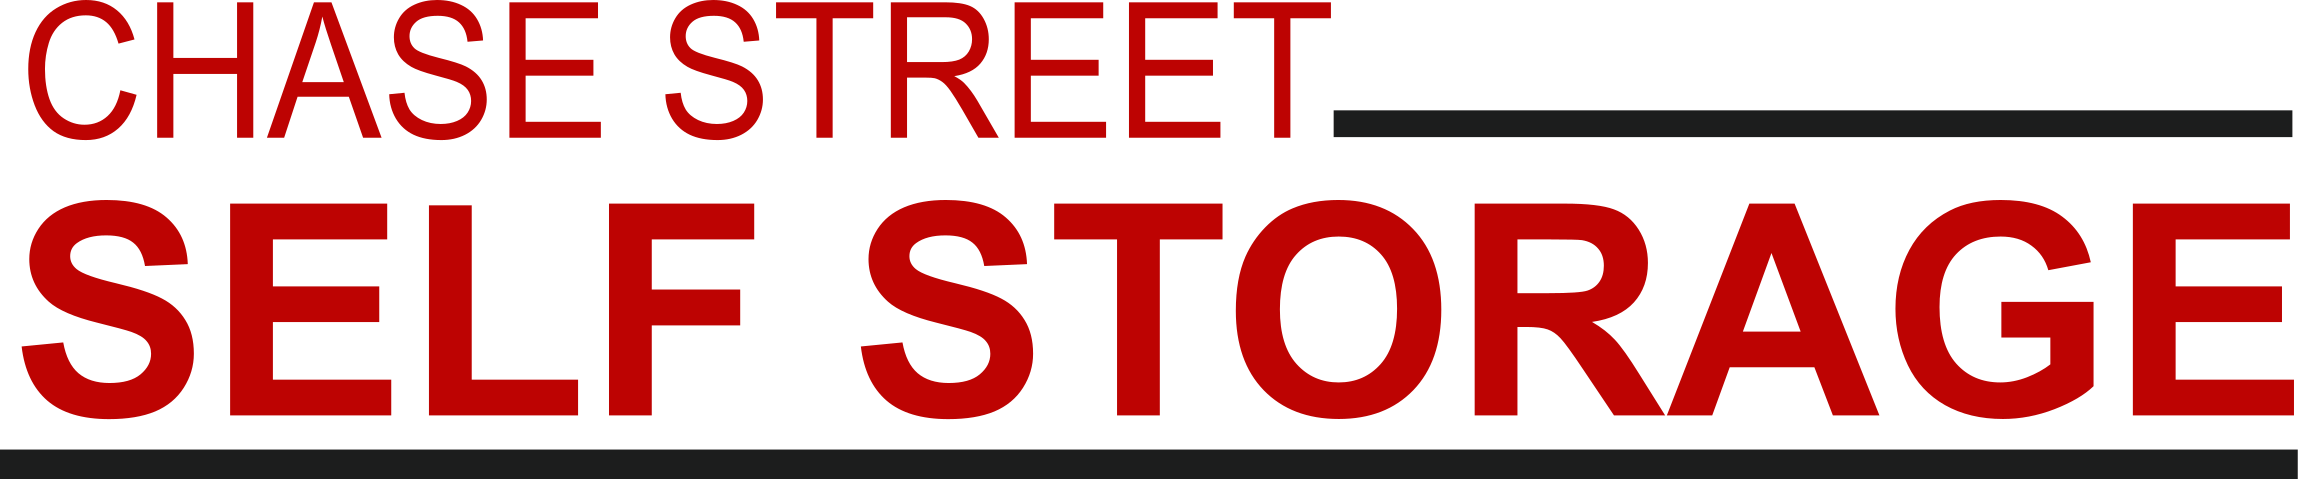 Chase Street Self Storage logo